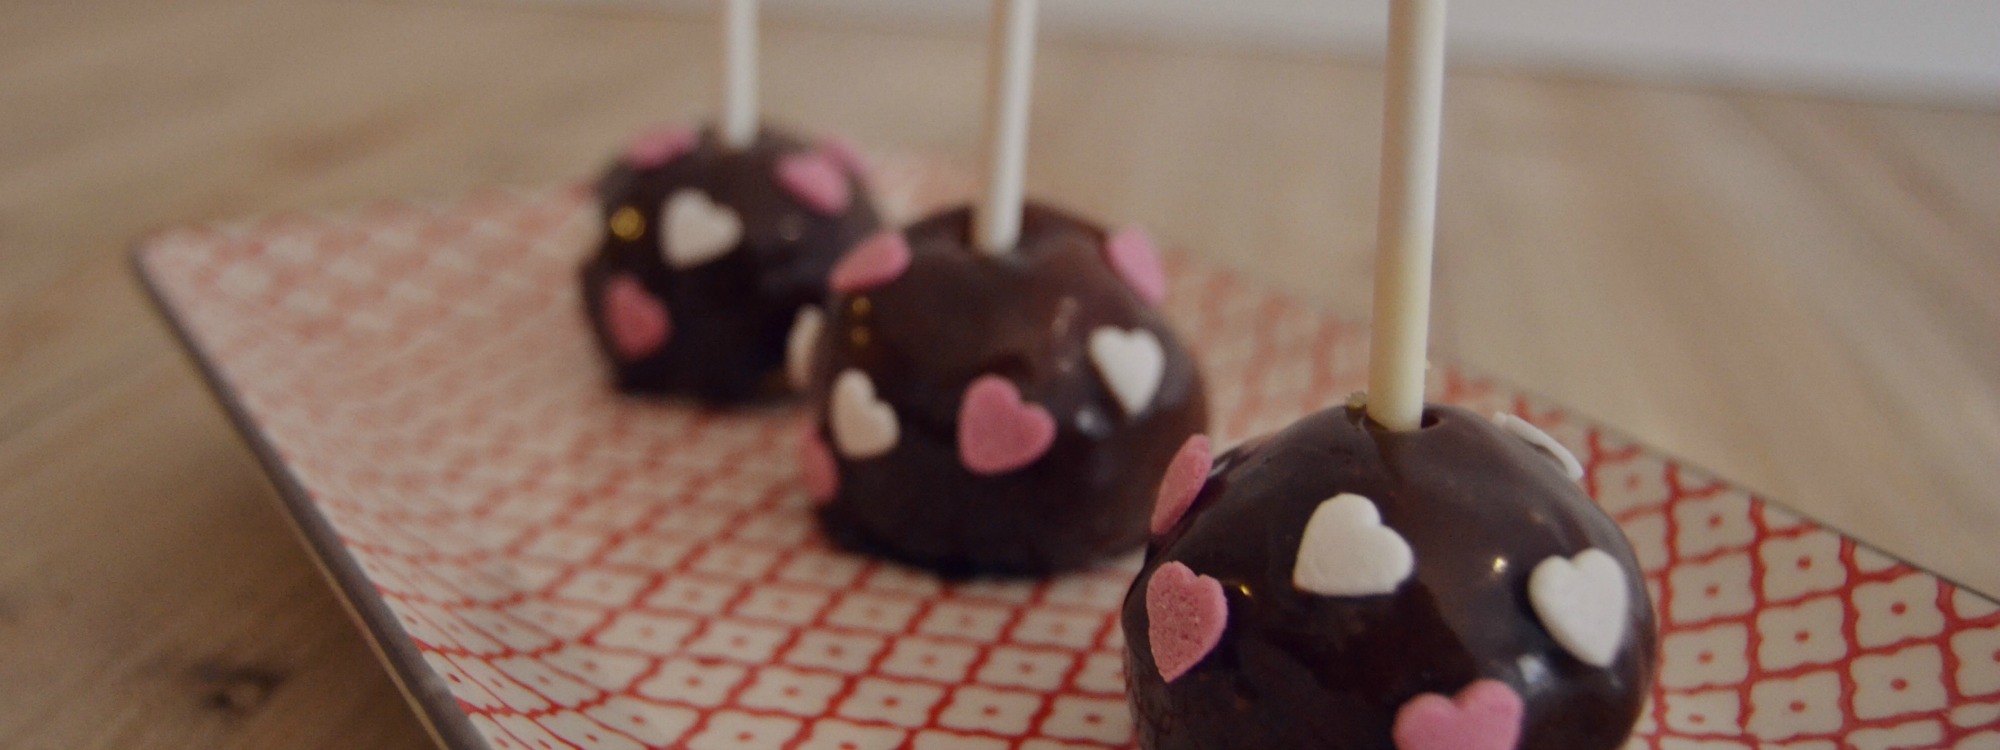 Popcakes amorosos [Receta de San Valentín]